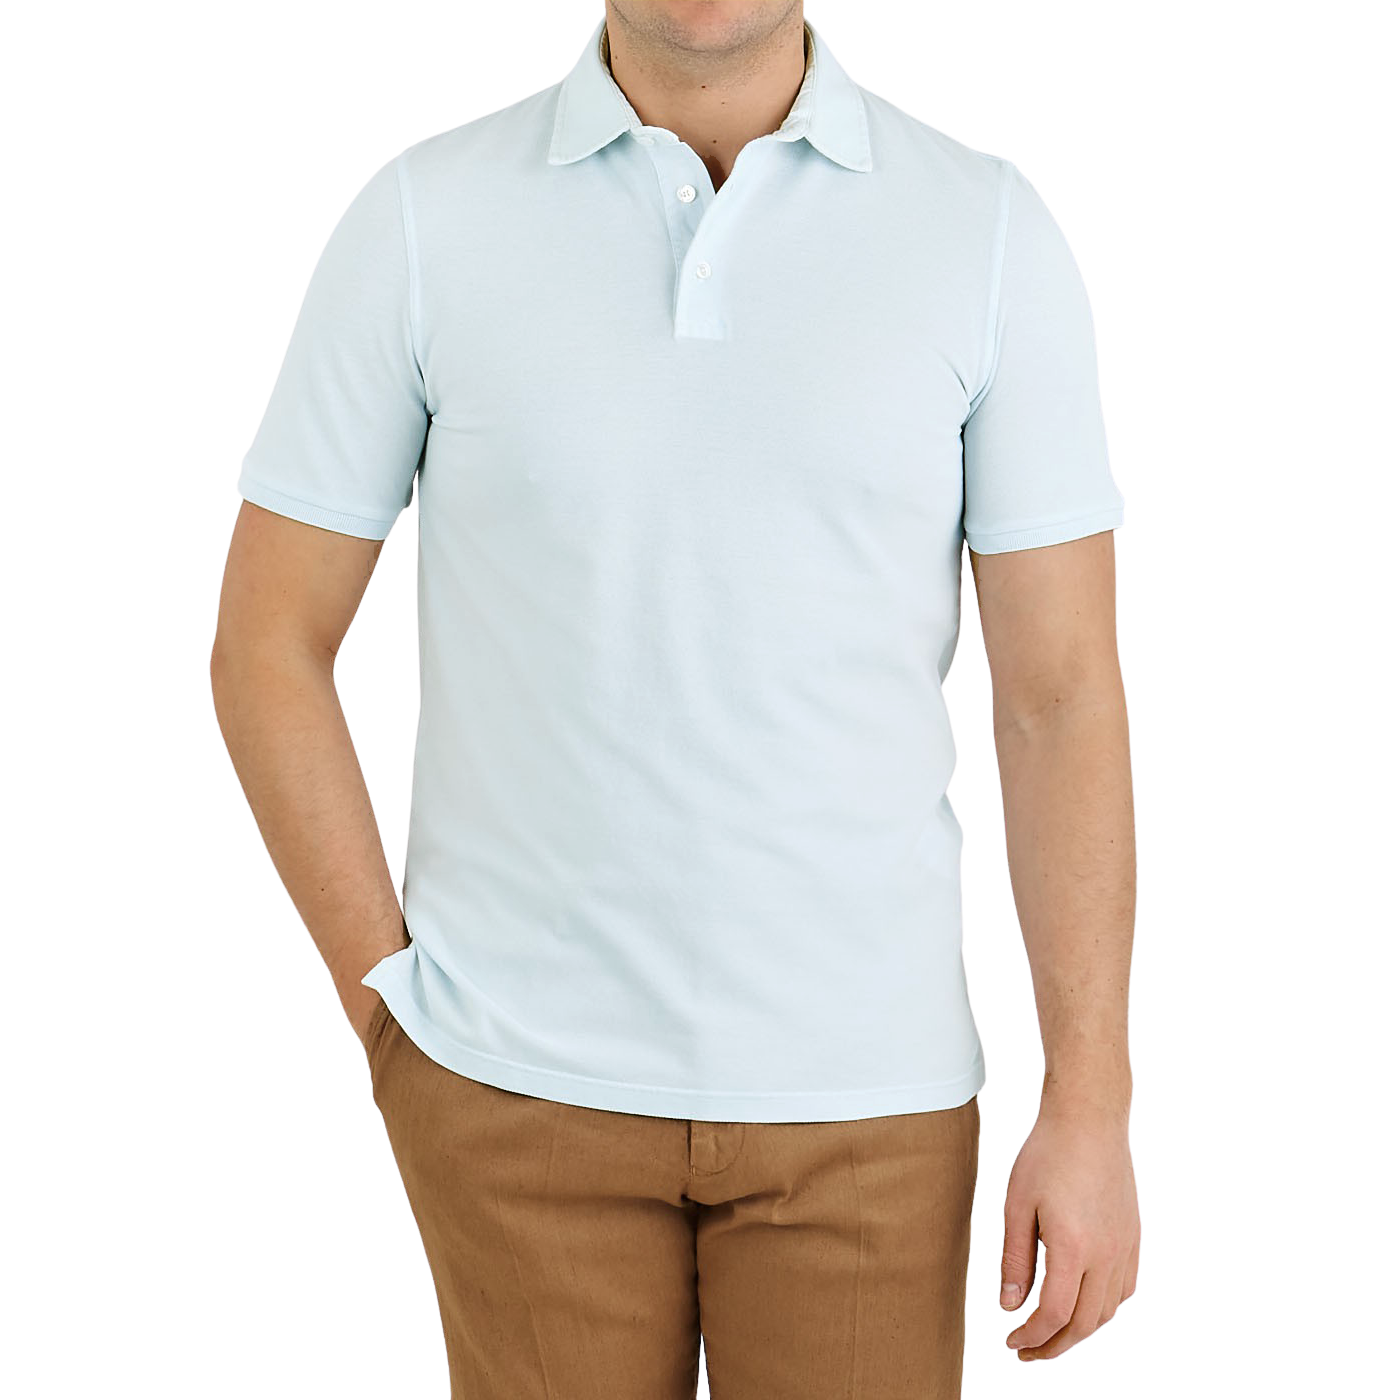 Mens Classic Polo Shirt 100% Cotton Short Sleeve Plain Pique Collared Tee Top